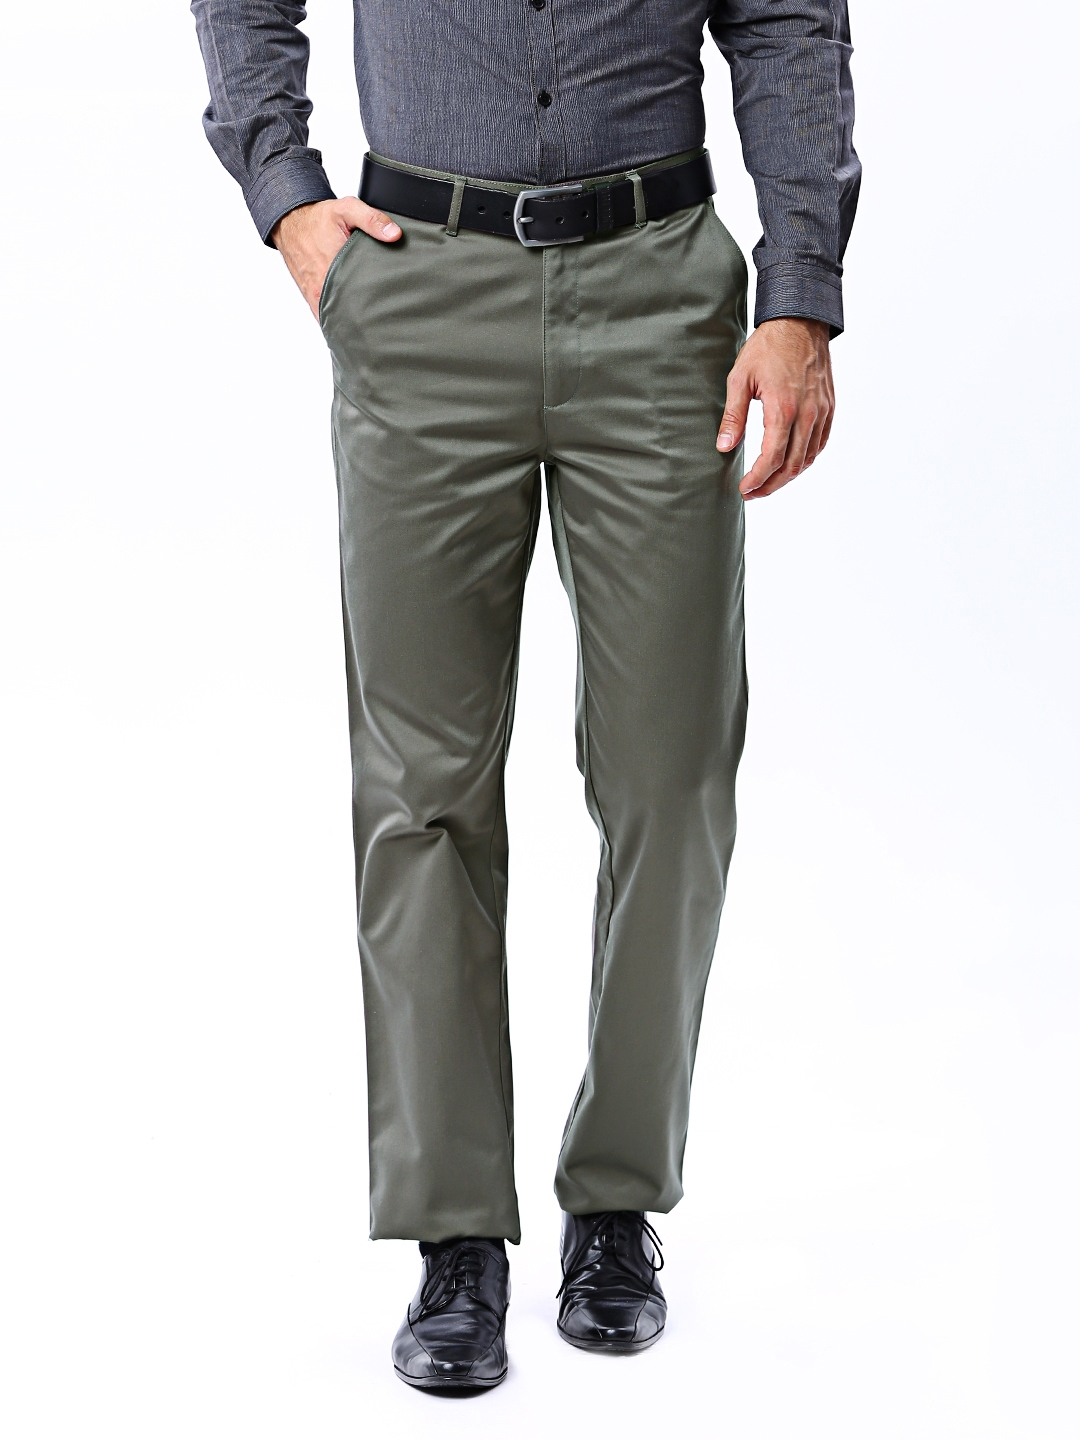 Buy Black Trousers  Pants for Men by BASICS Online  Ajiocom